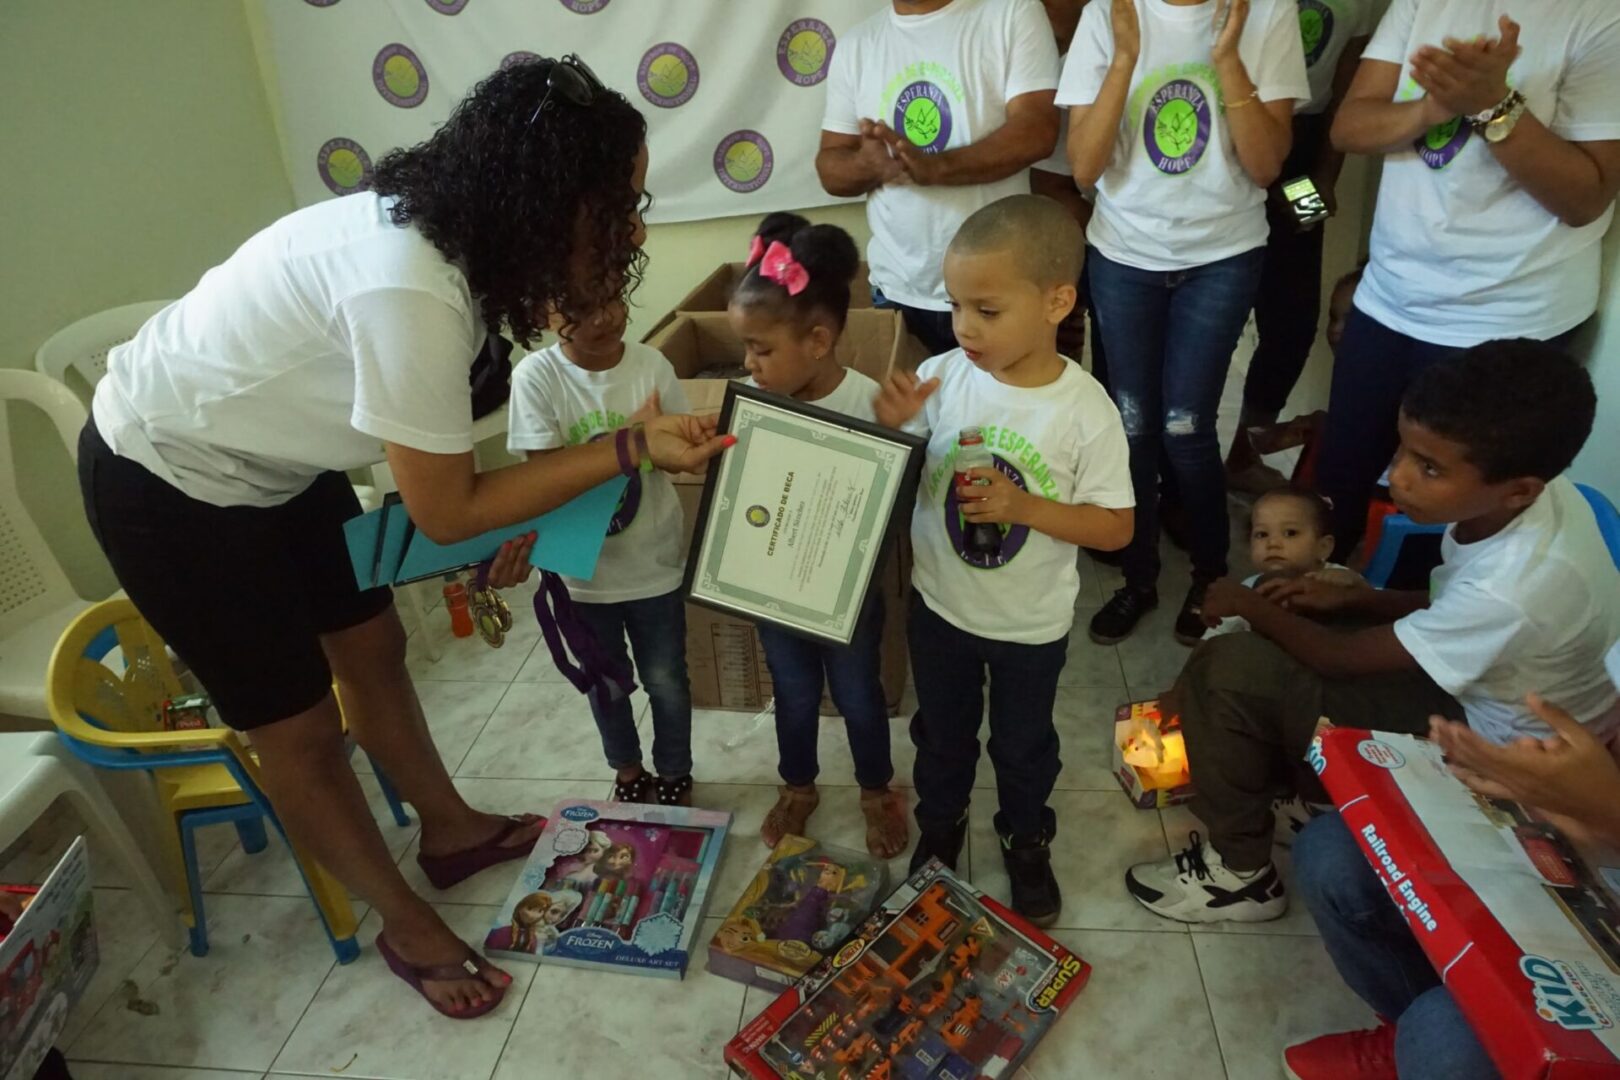 A female staff giving the children a certificate